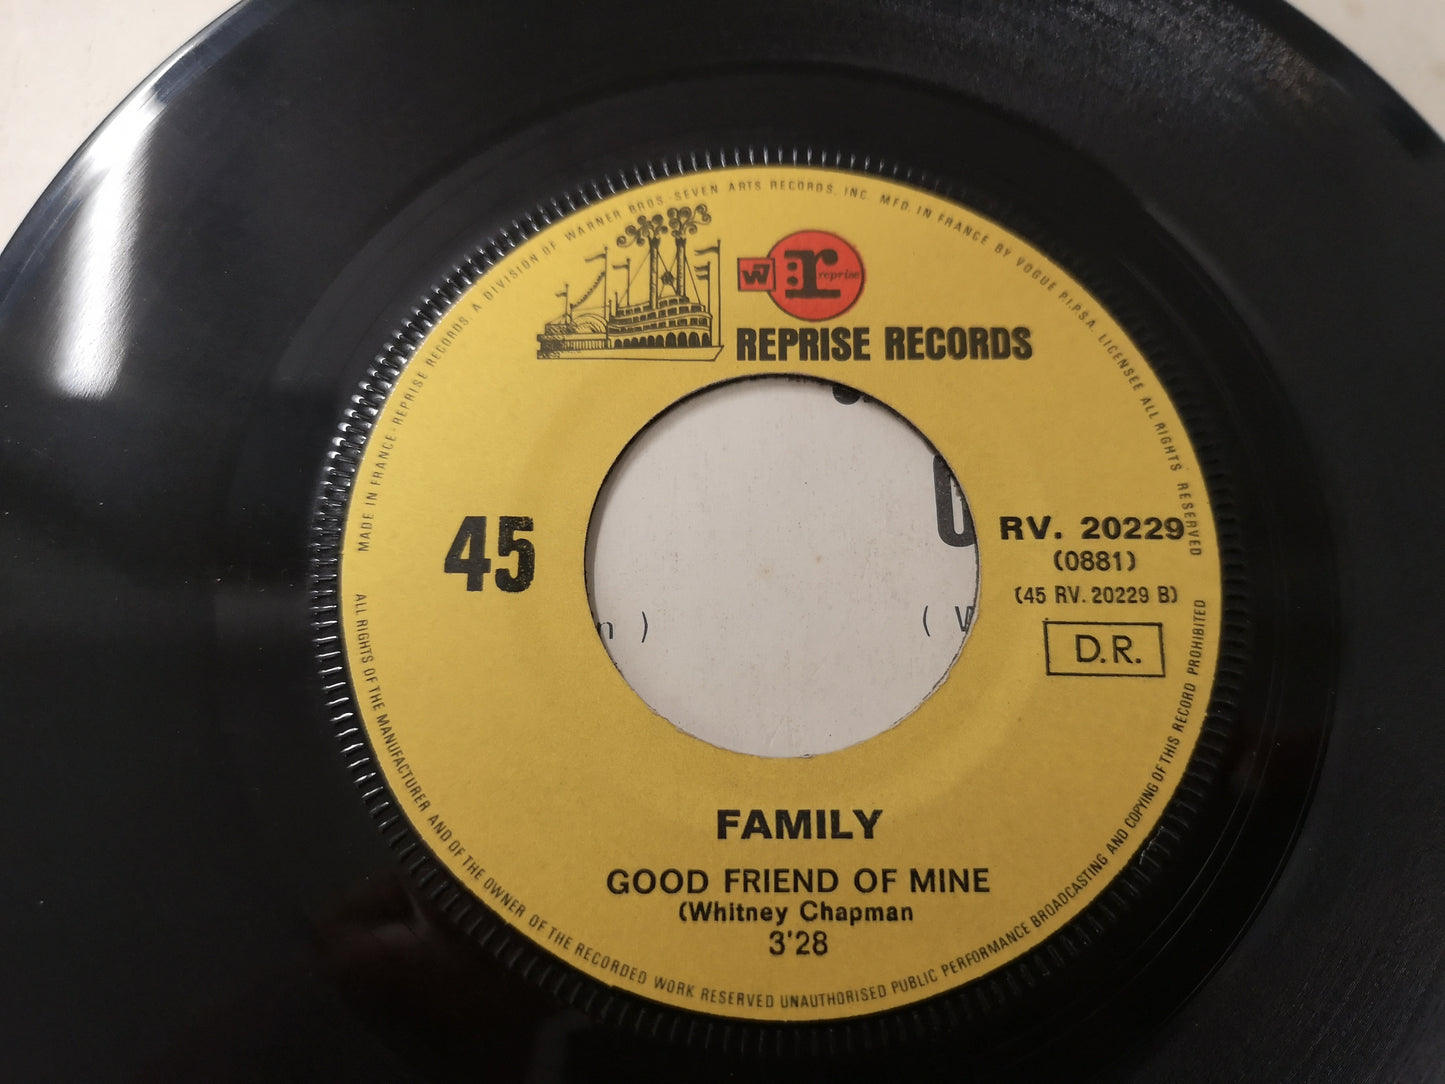 Family "No Mule's Fool" Orig France 1971 VG/VG+ (7" Single)